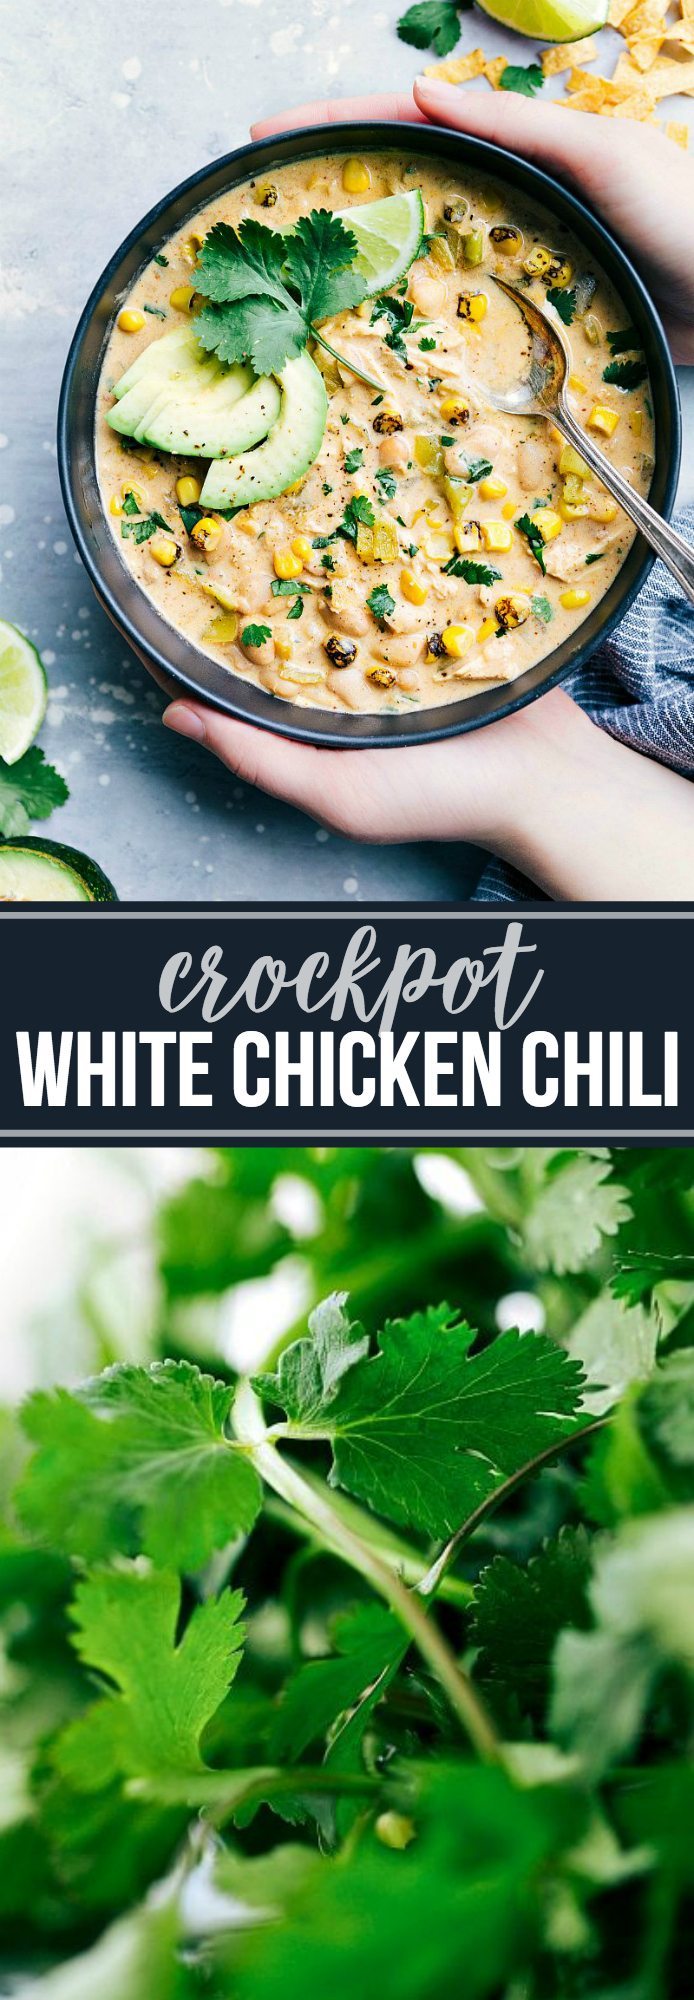 Deliciously creamy (and SO easy) slow cooker white chicken chili via chelseasmessyapron.com #setitandforgetit #crockpot #slowcooker #whitechicken #whitebean #chili #creamy #thick #easy #quick #kidfriendly #dinner